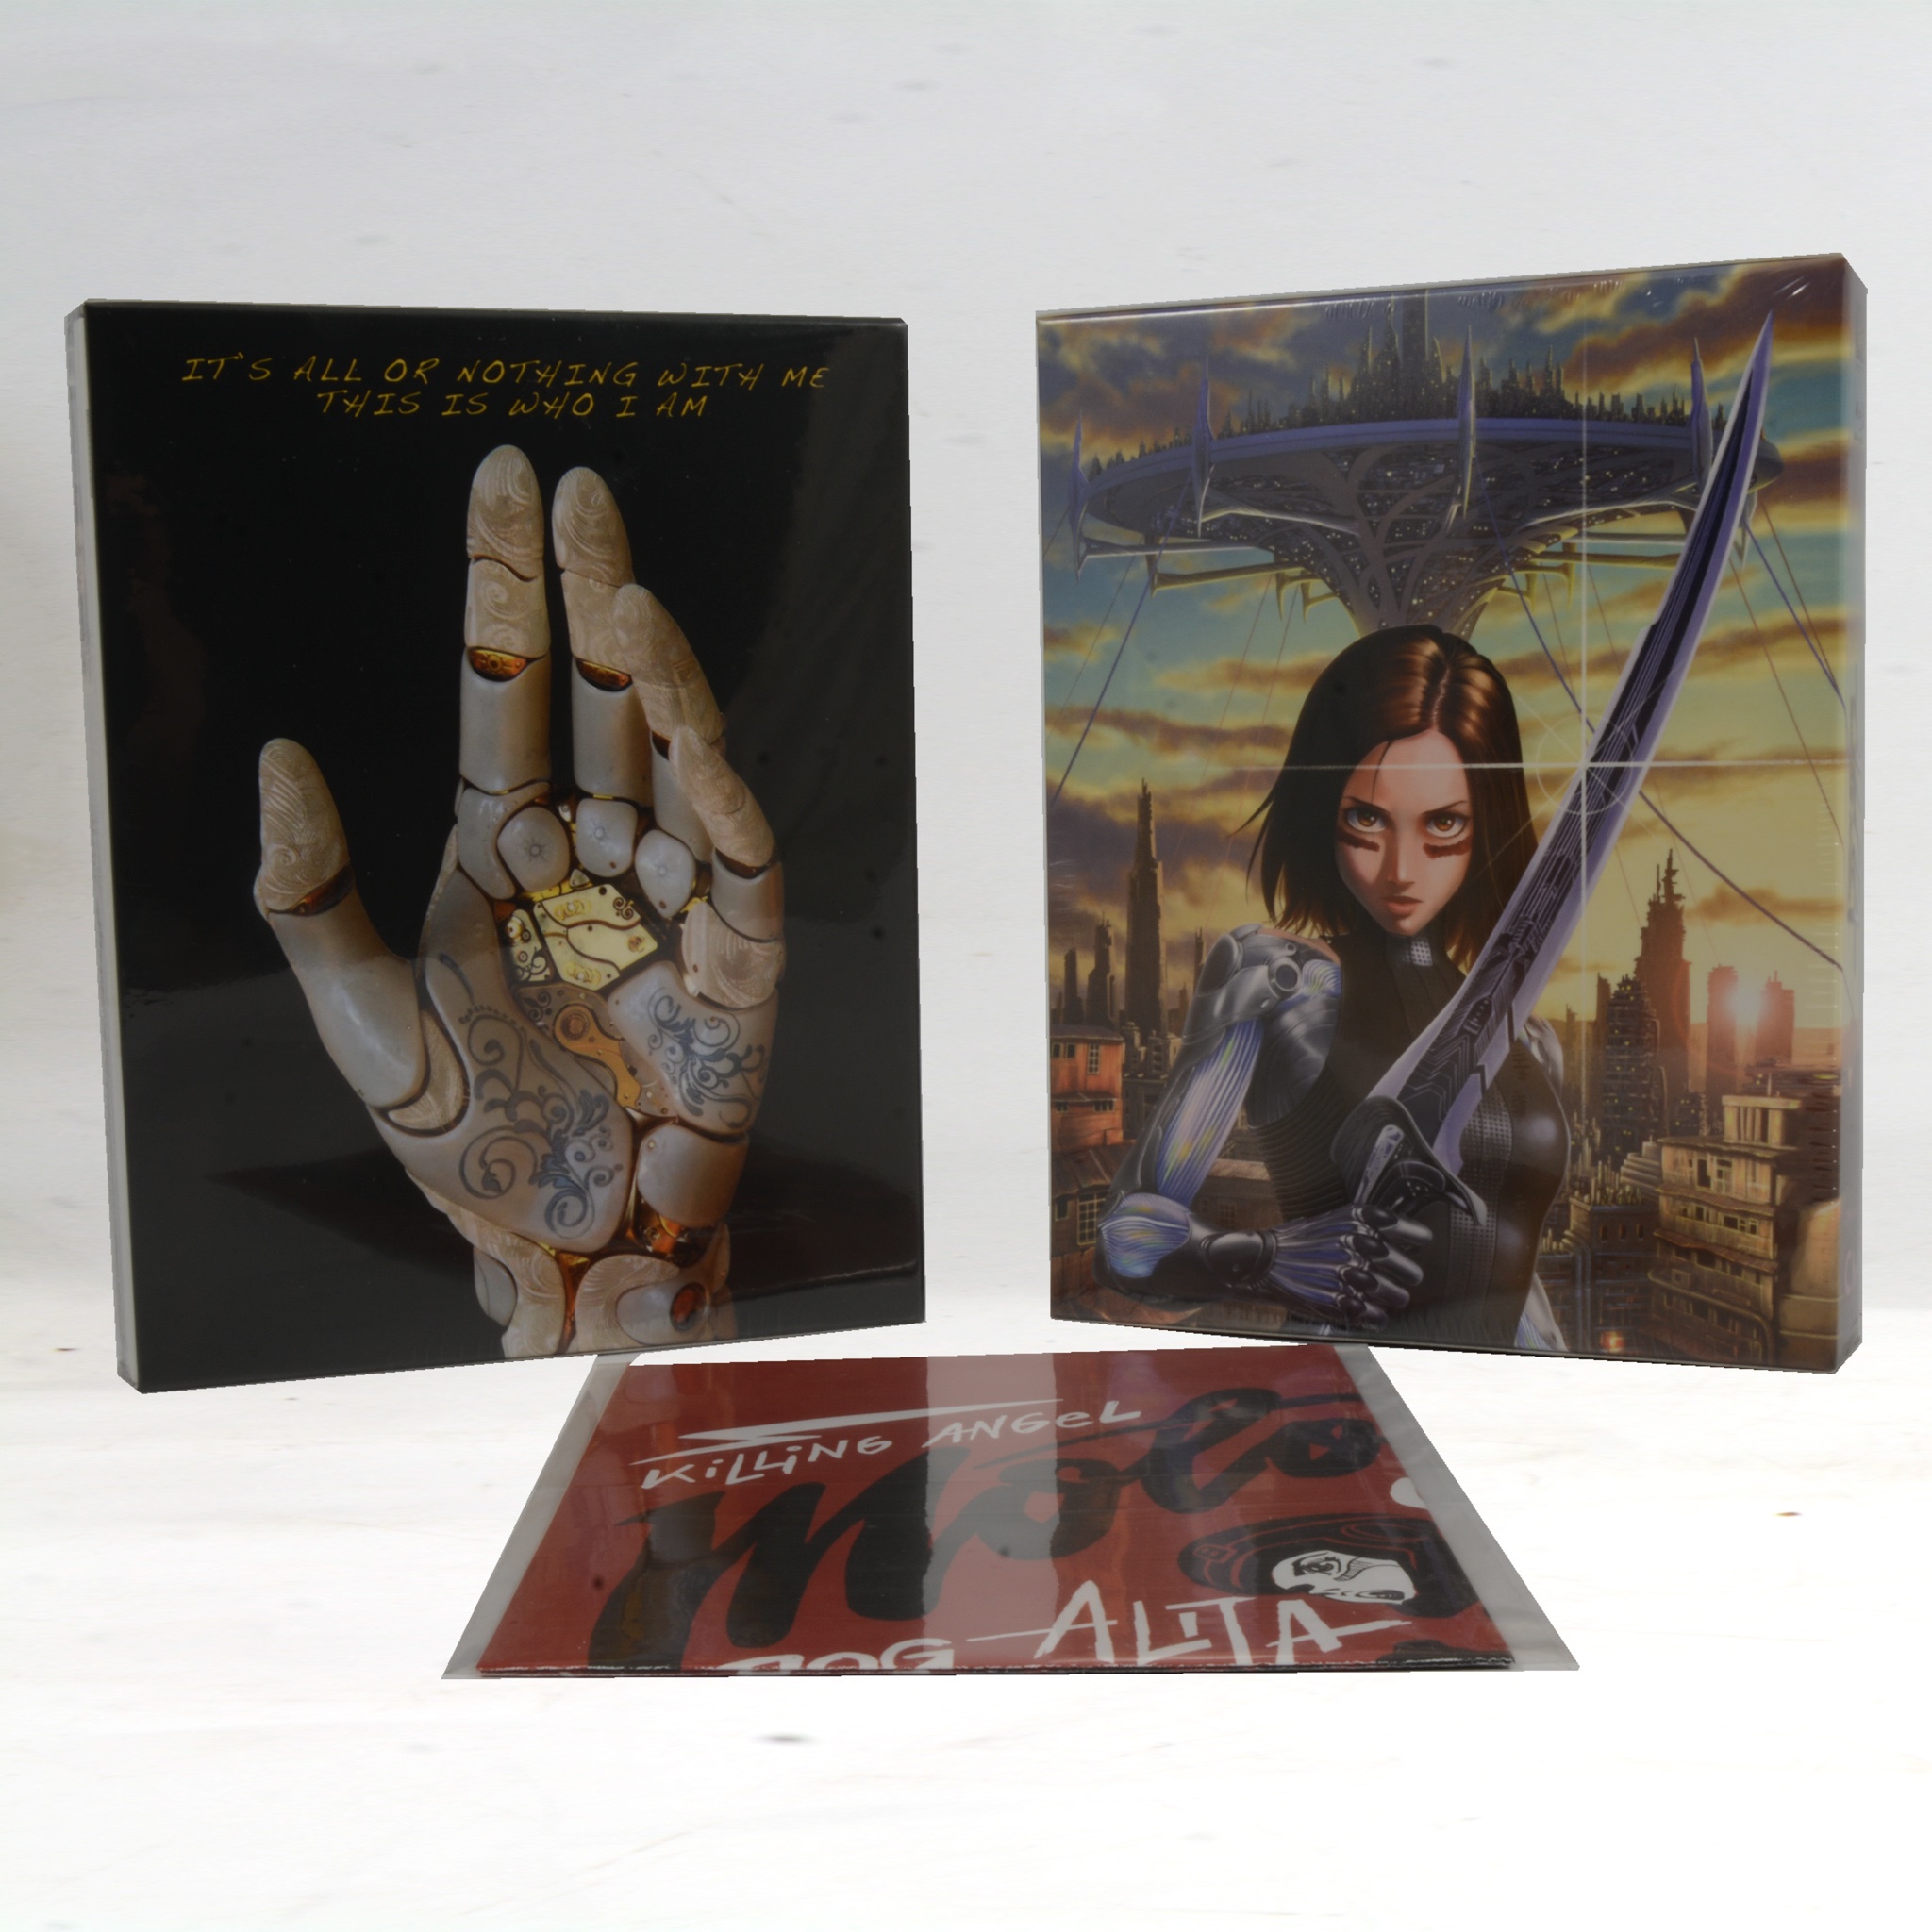 Alita Battle Angel combo set Cinemuseum Art Steelbook 4K Ultra HD Blu-rays - Image 2 of 2